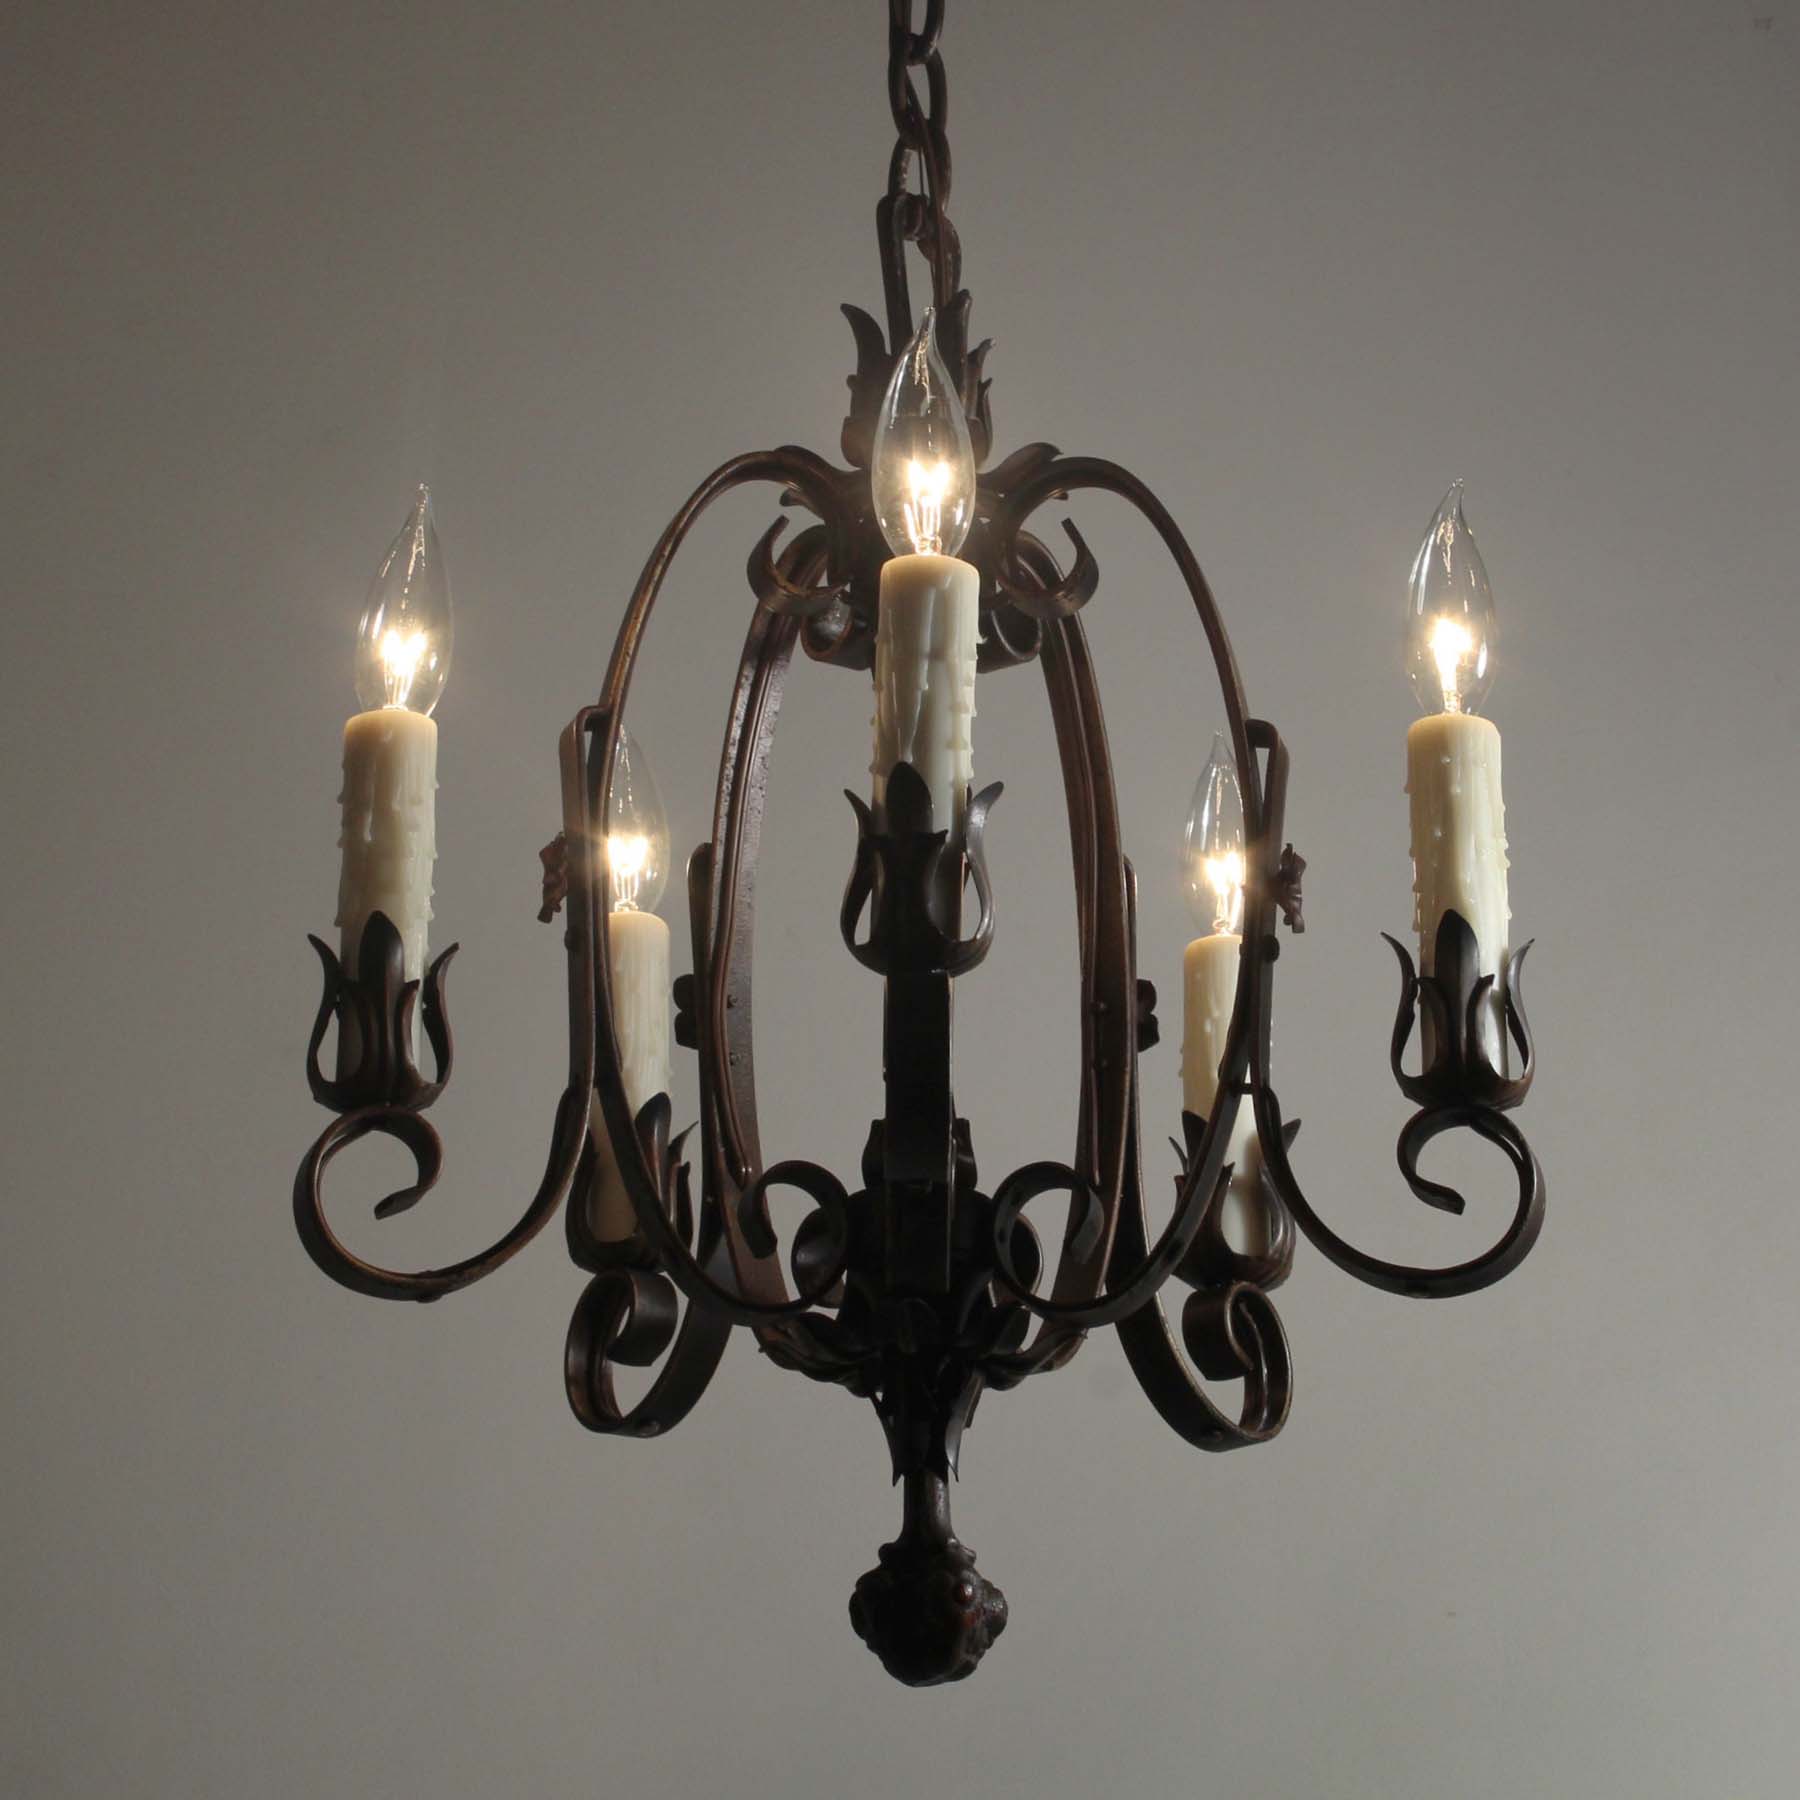 Wrought Iron Five-Light Chandelier, Antique Lighting-67092